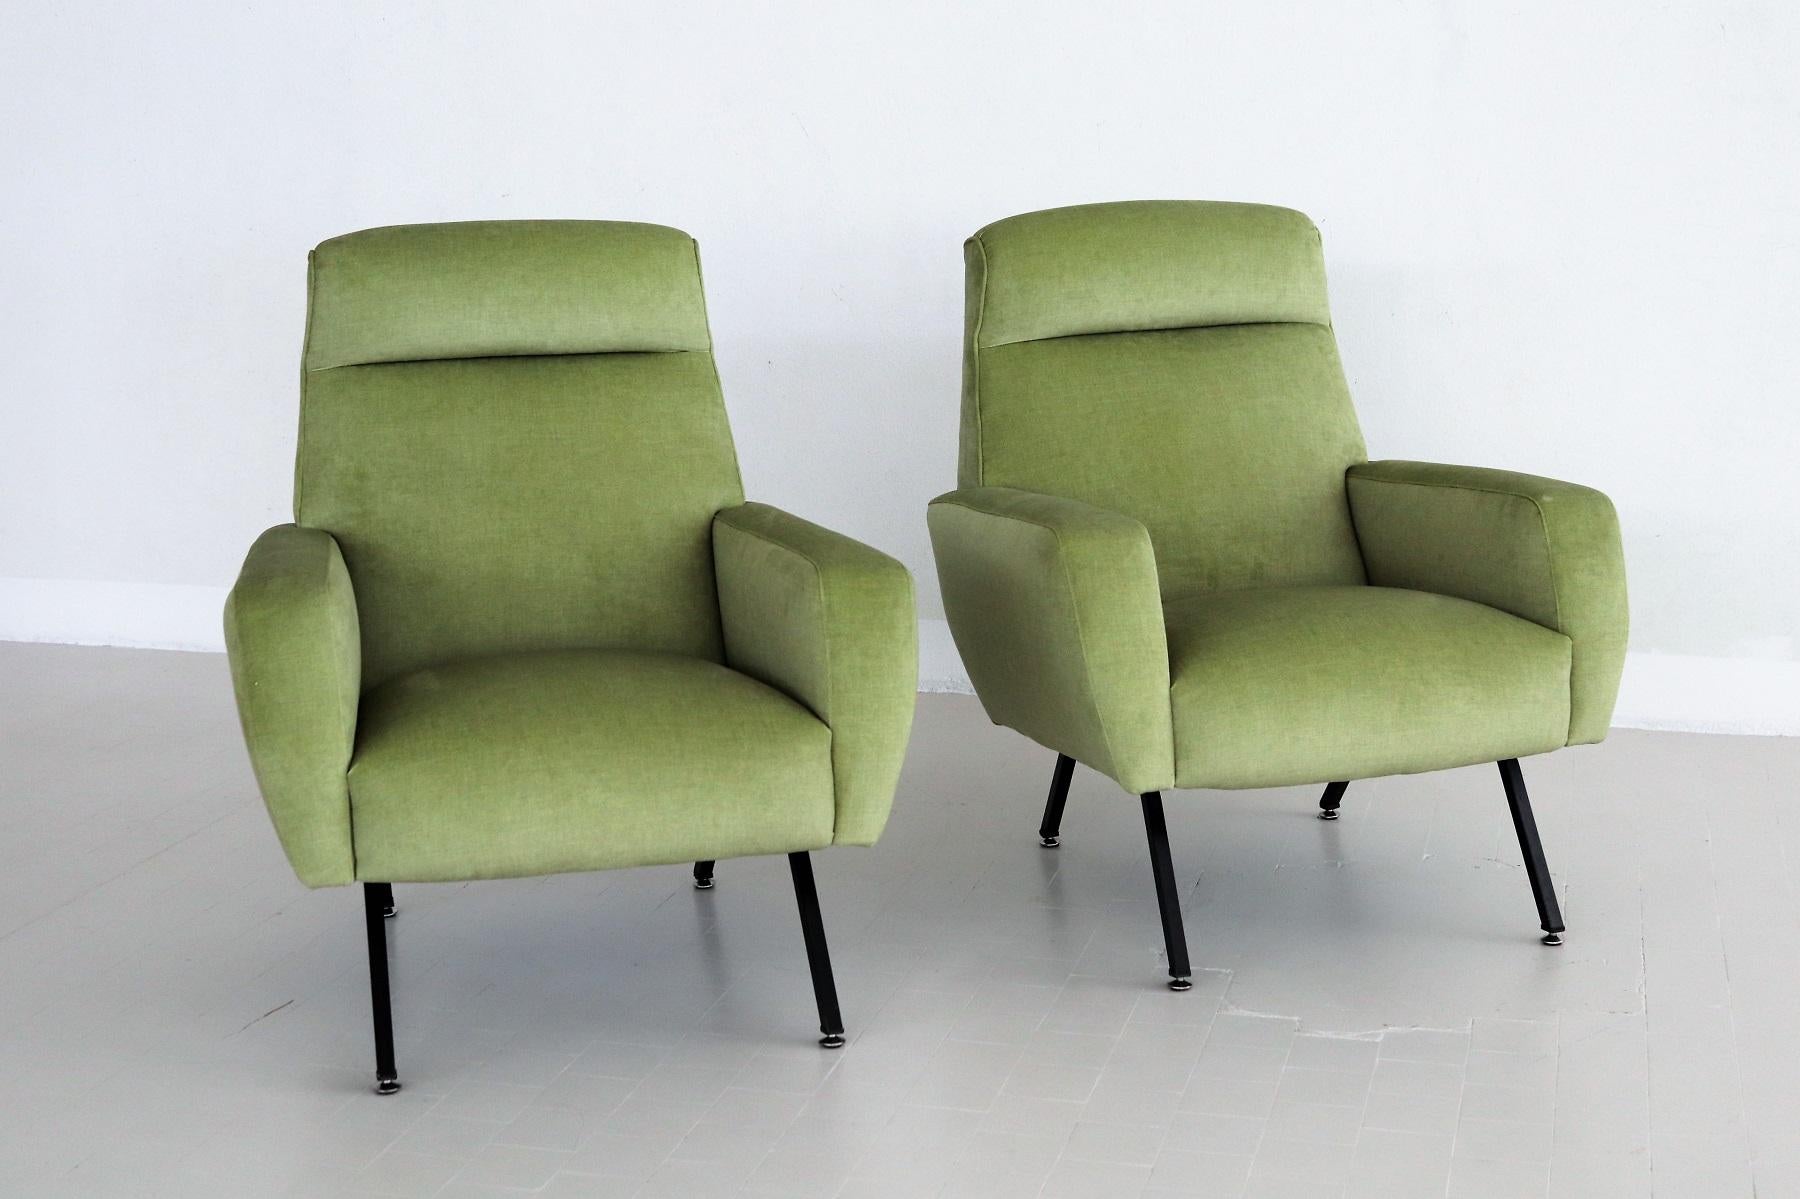 Painted Italian Midcentury Armchairs Re-Upholstered in Green Velvet, 1960s For Sale